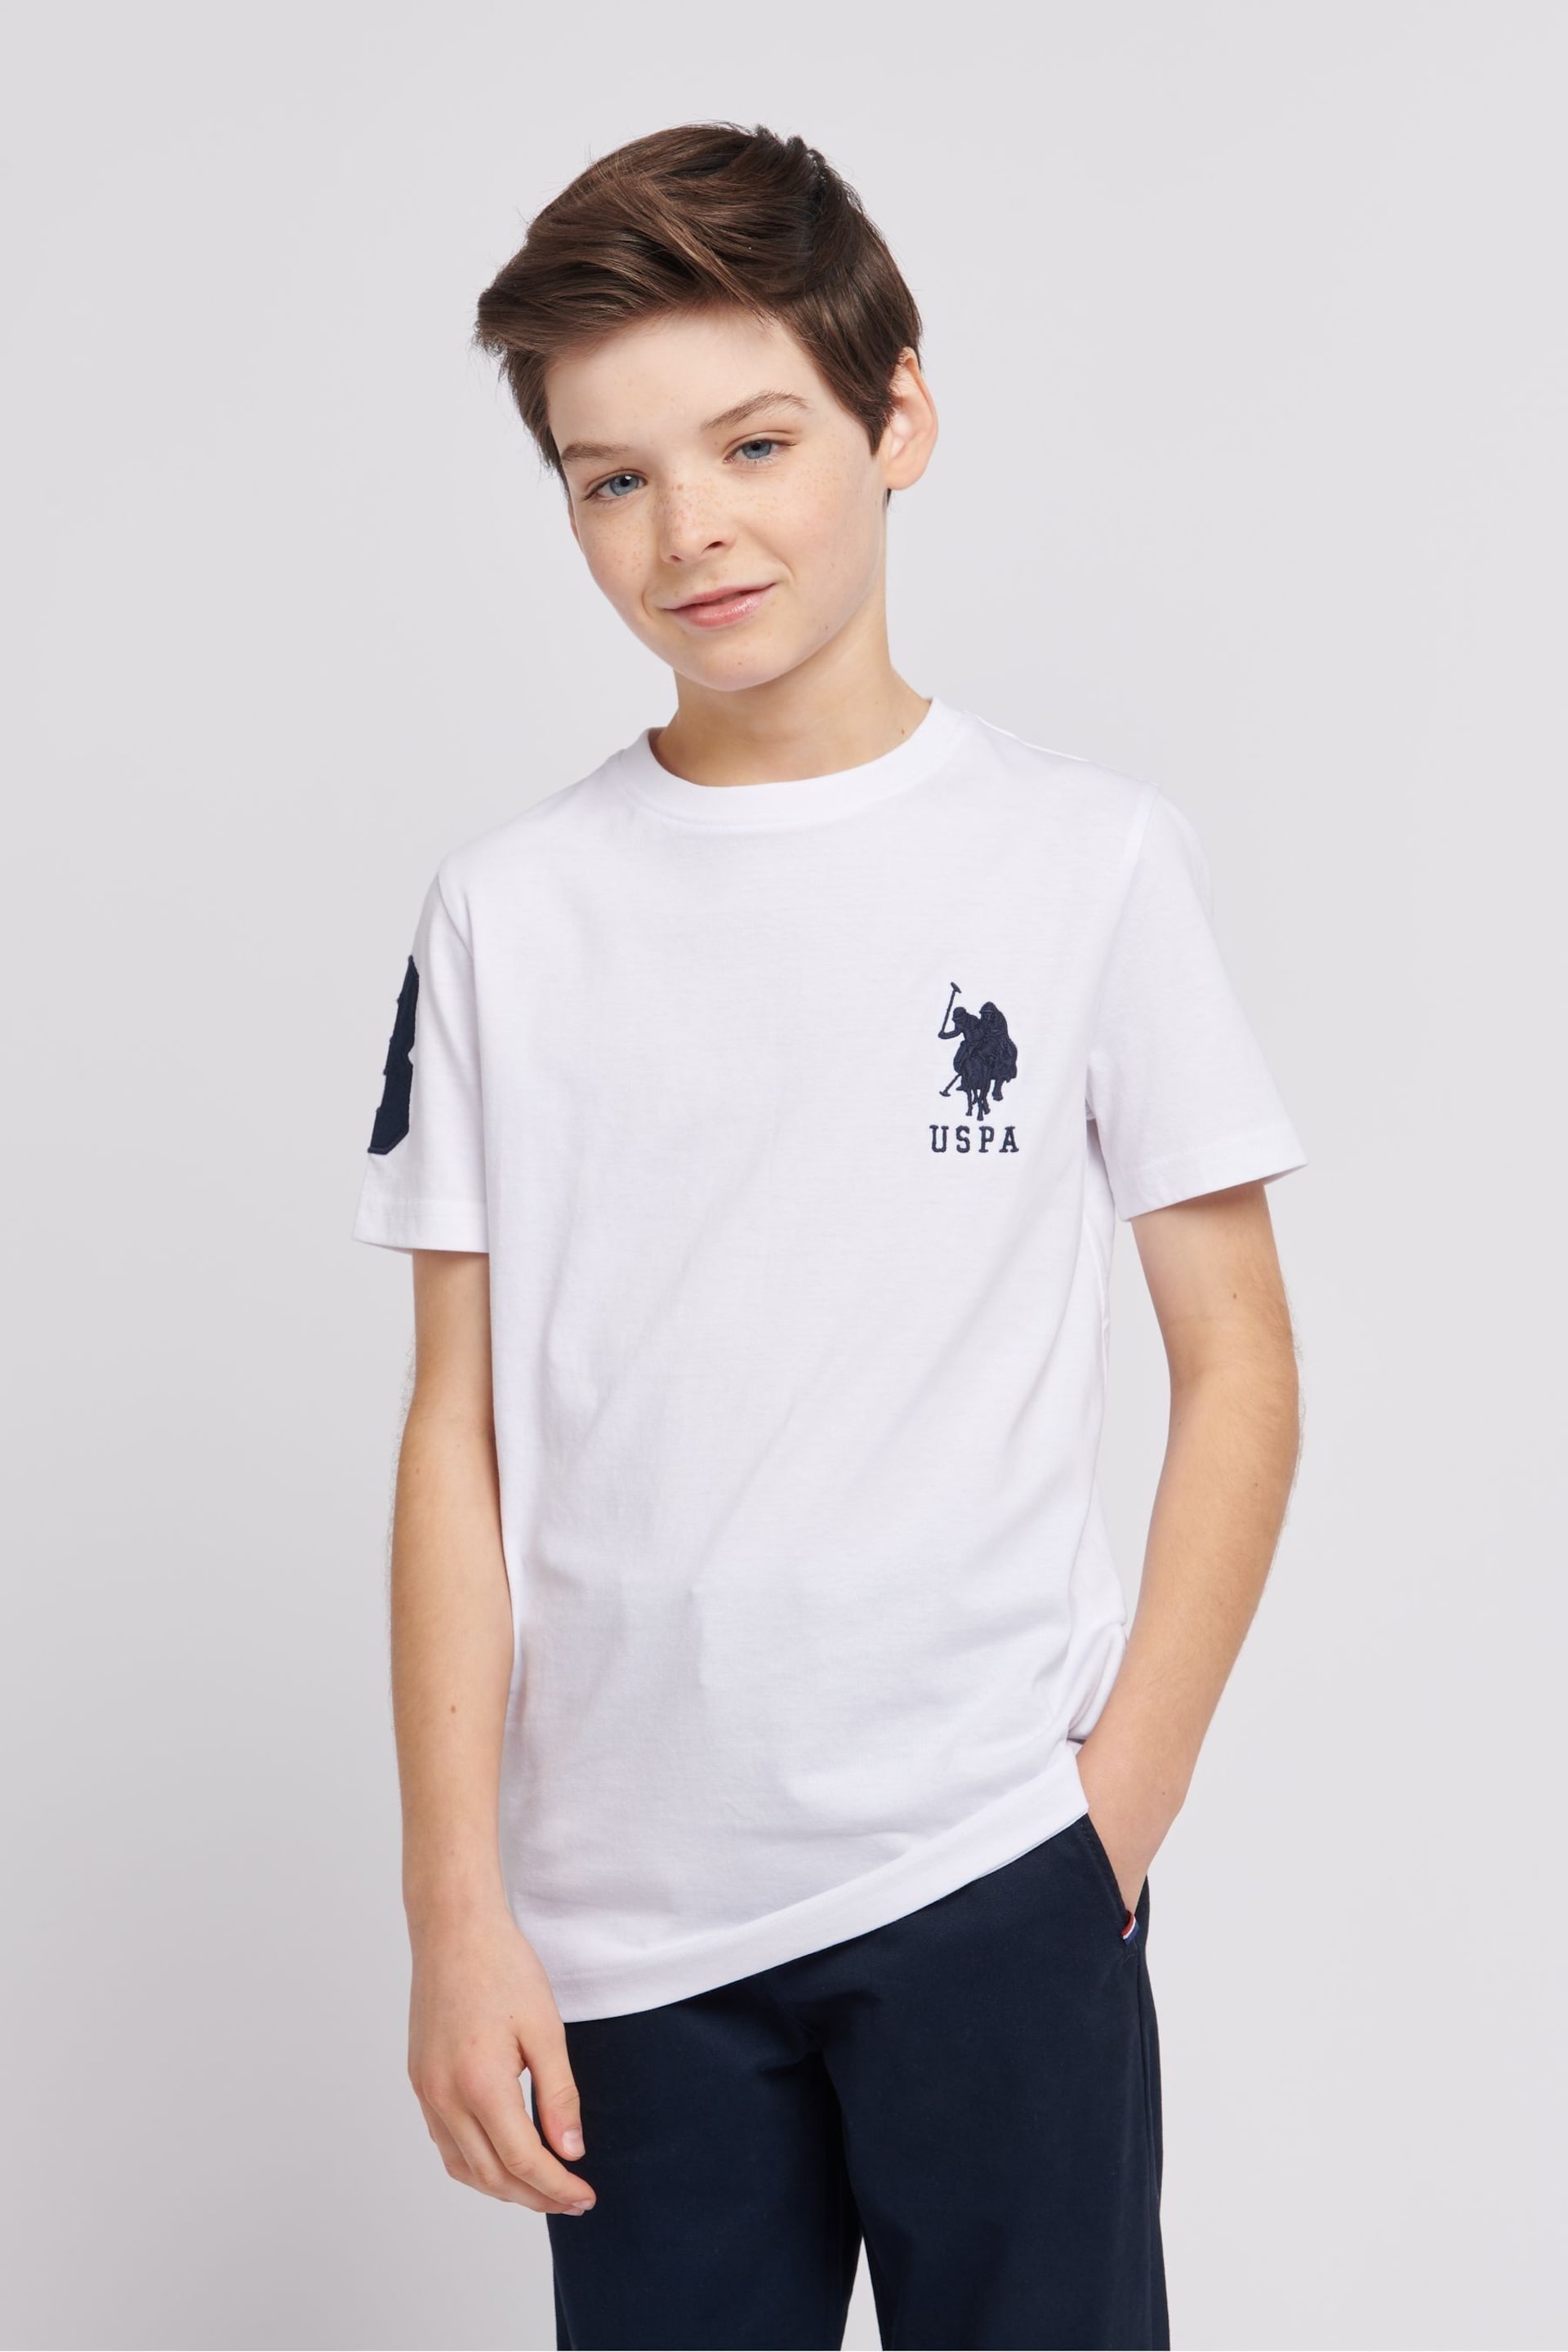 U.S. Polo Assn. Boys Player 3 T-Shirt - Image 1 of 7